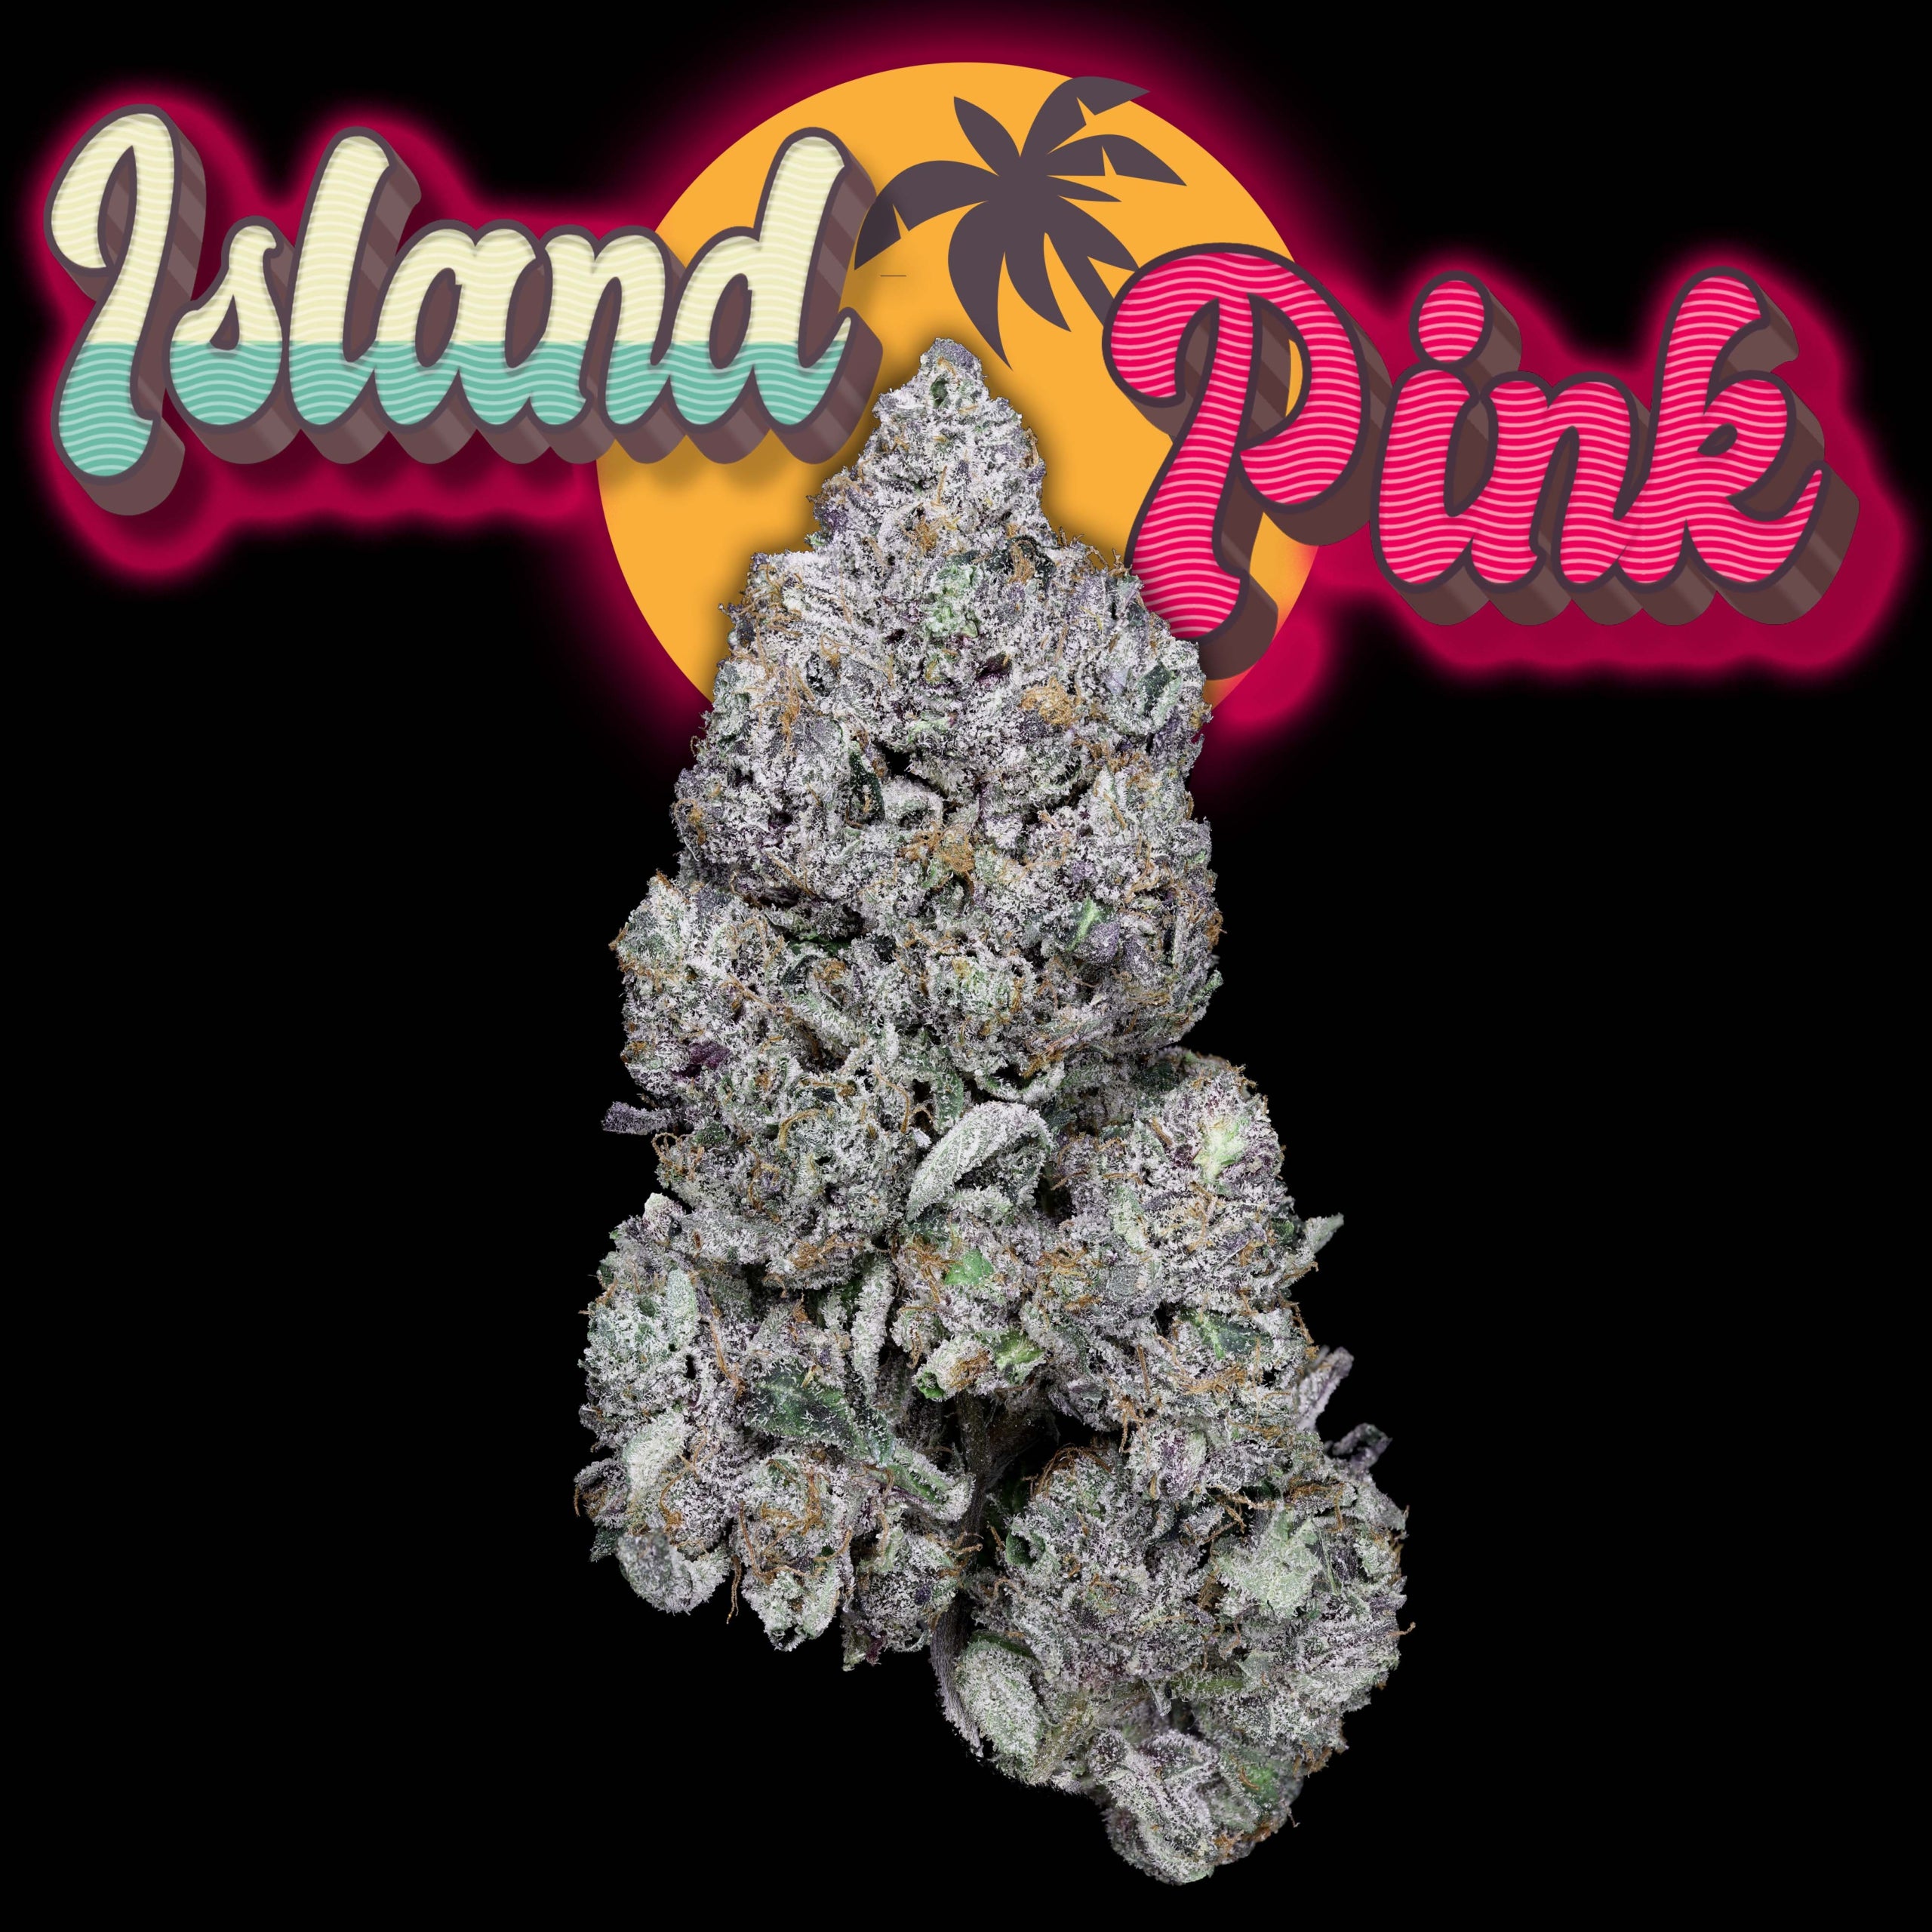 Island Pink Thumbnail